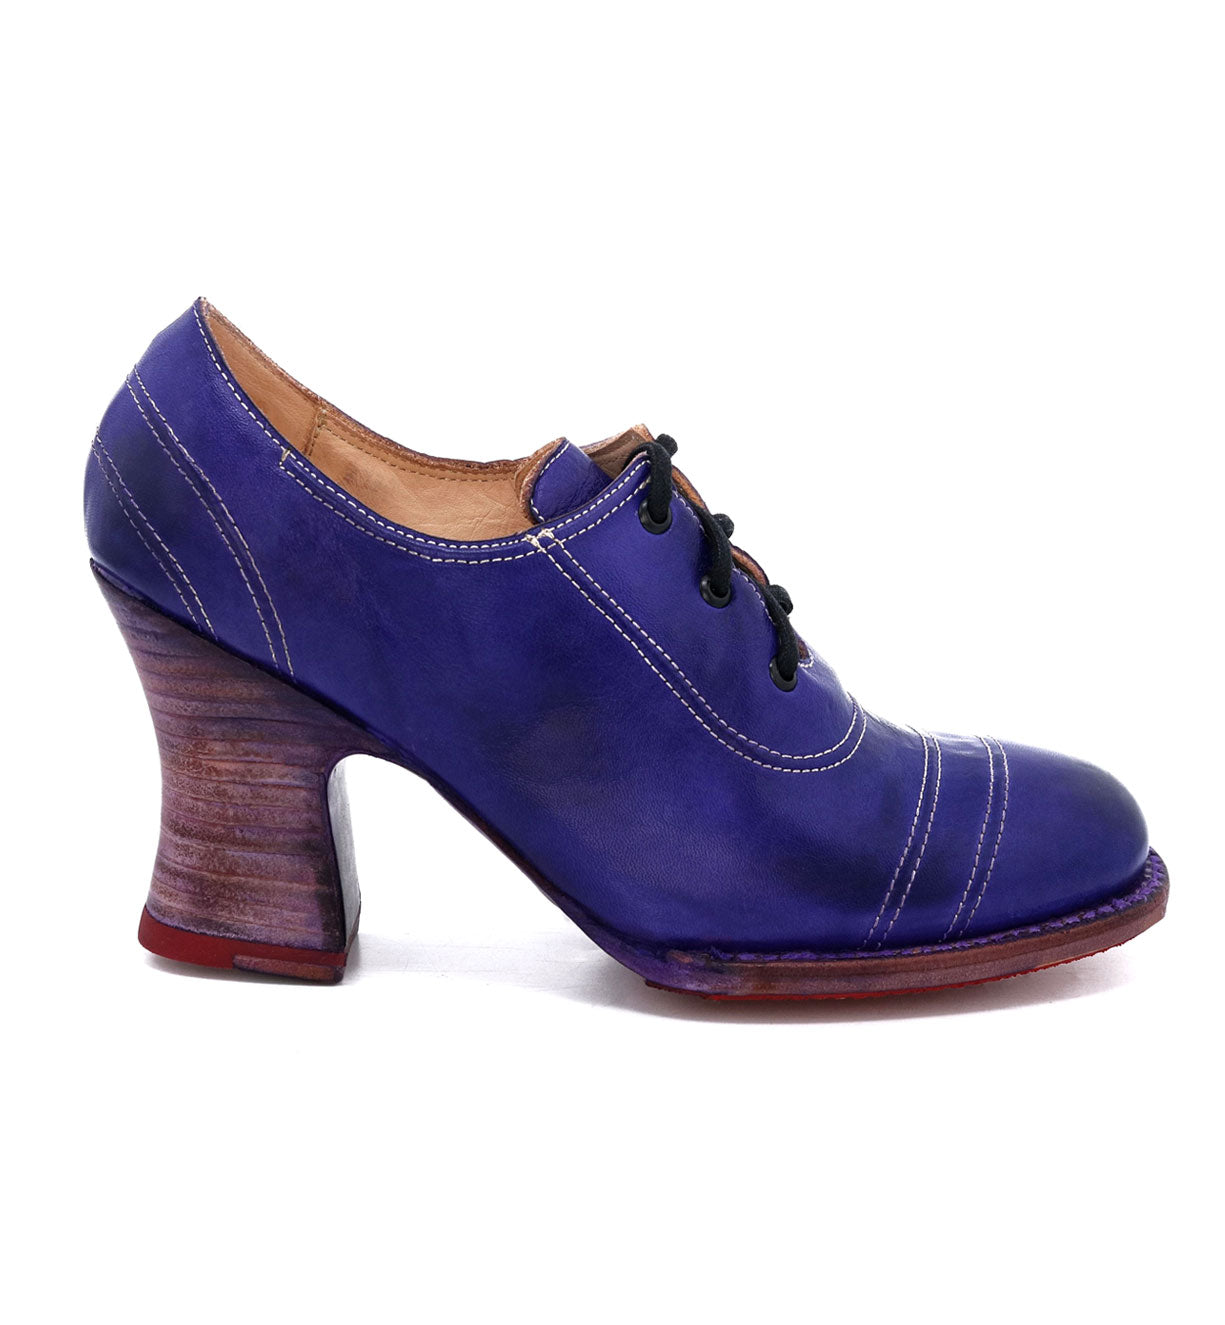 A women's Oak Tree Farms Nanny enchanting blue oxford shoe with a wooden heel.